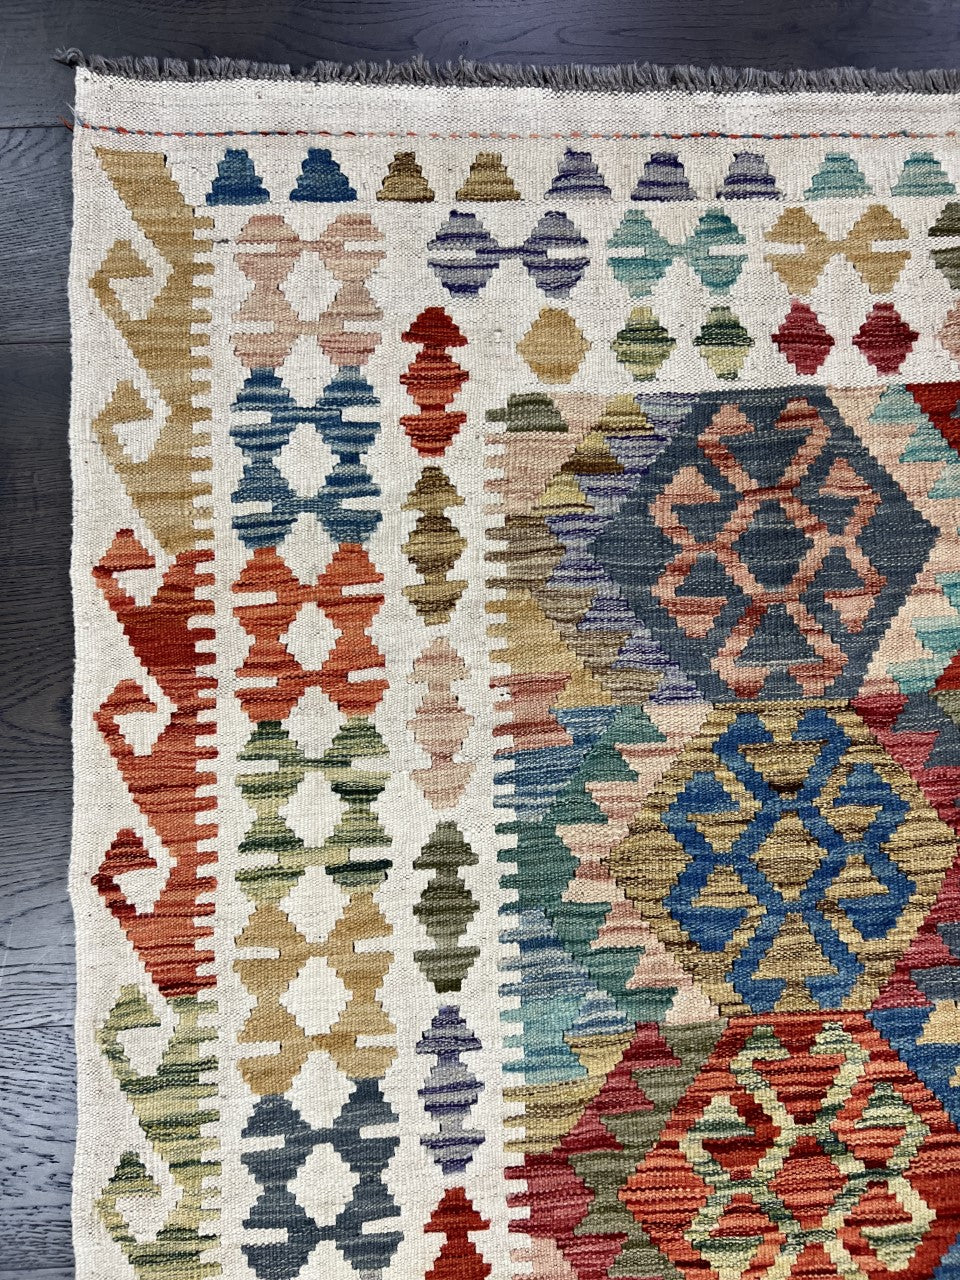 Beautiful Afghan Kilim new decorative rug